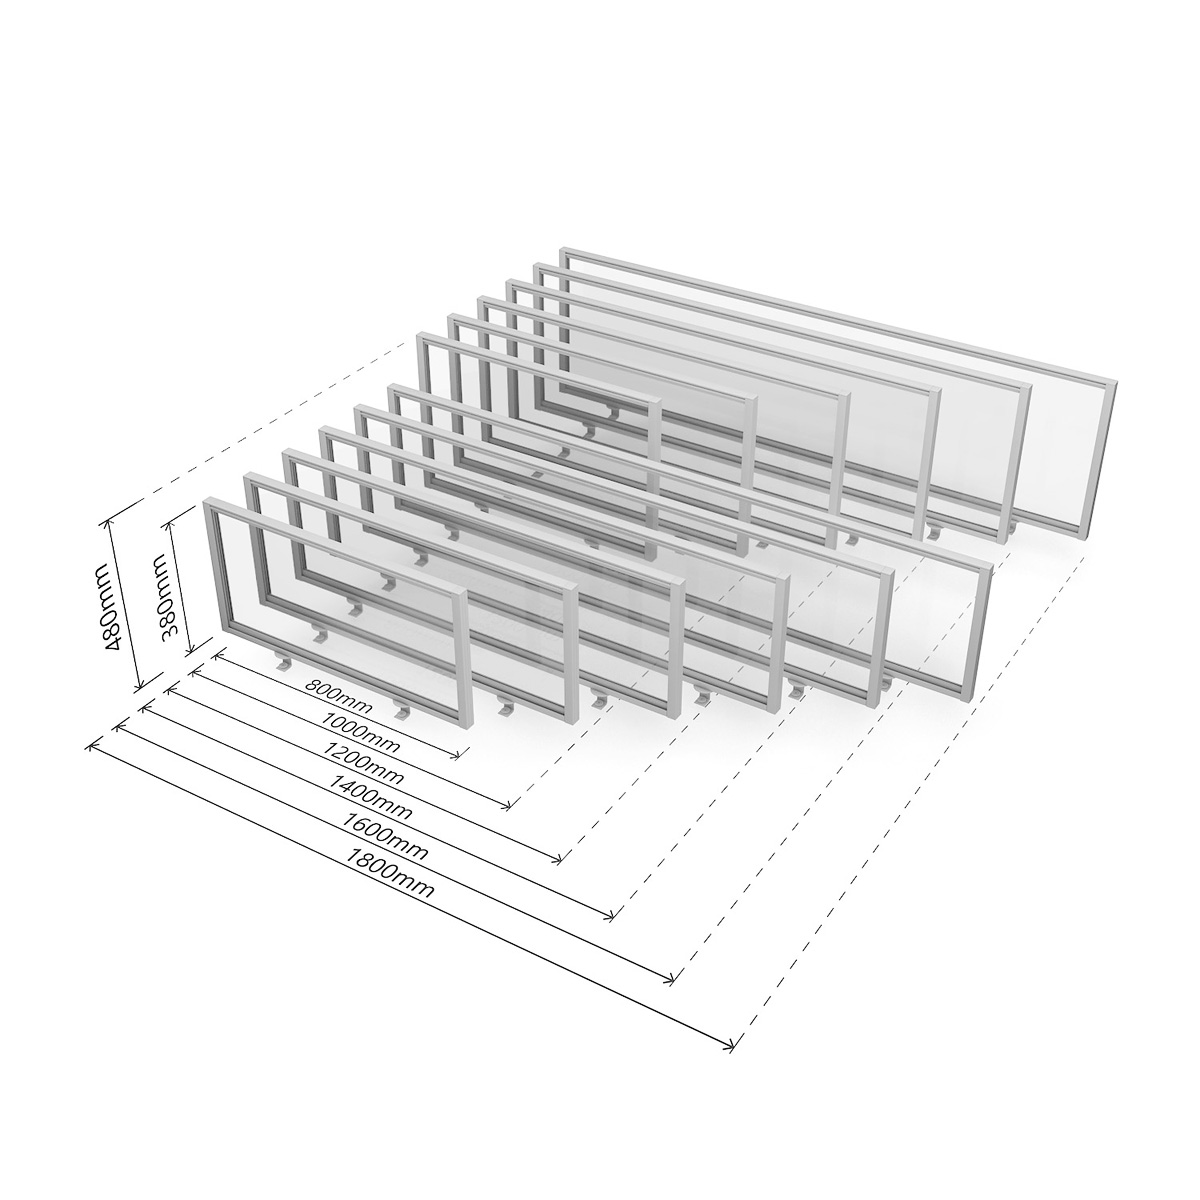 Dimensions of FRONTIER® Glazed Office Screen Desk Divider Range